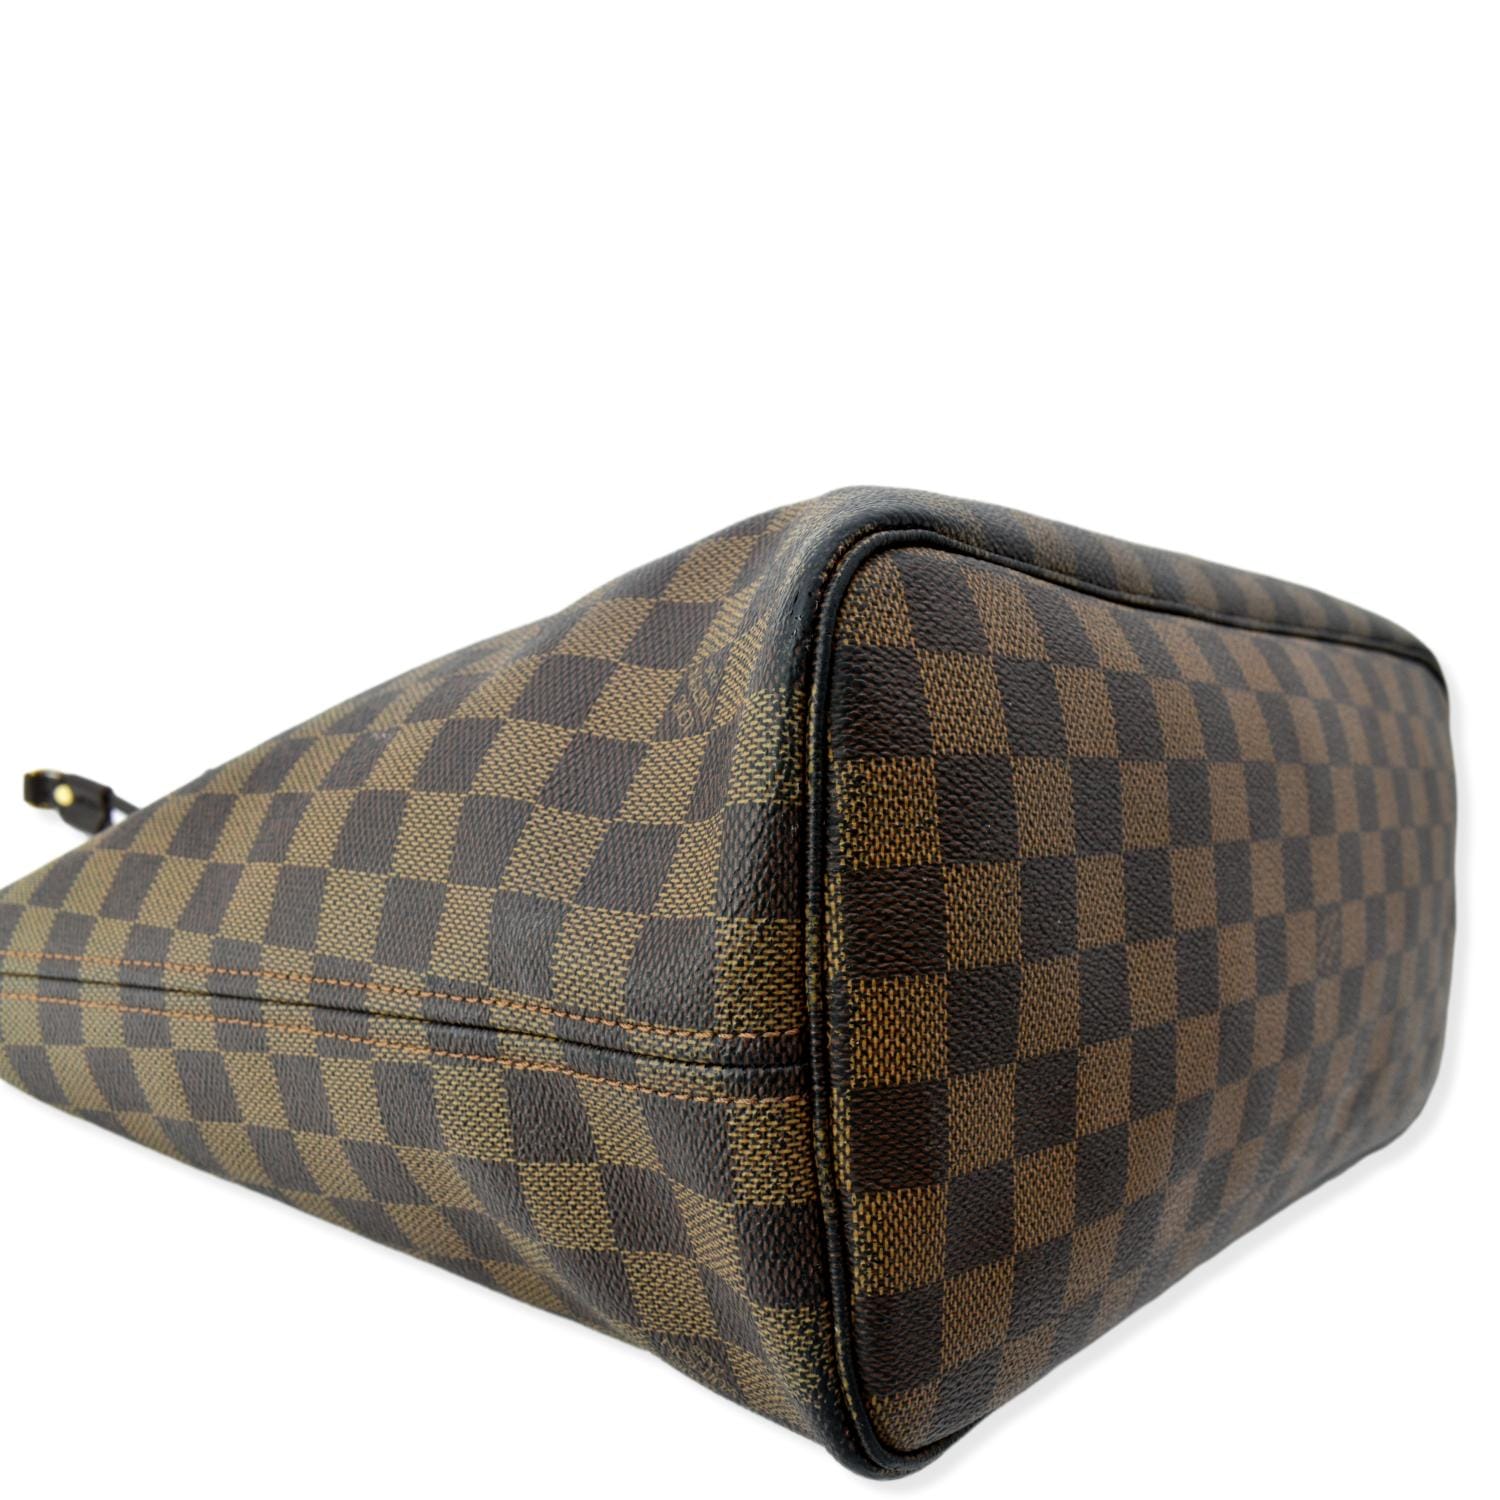 Louis Vuitton Damier Ebene Neverfull MM - Brown Totes, Handbags